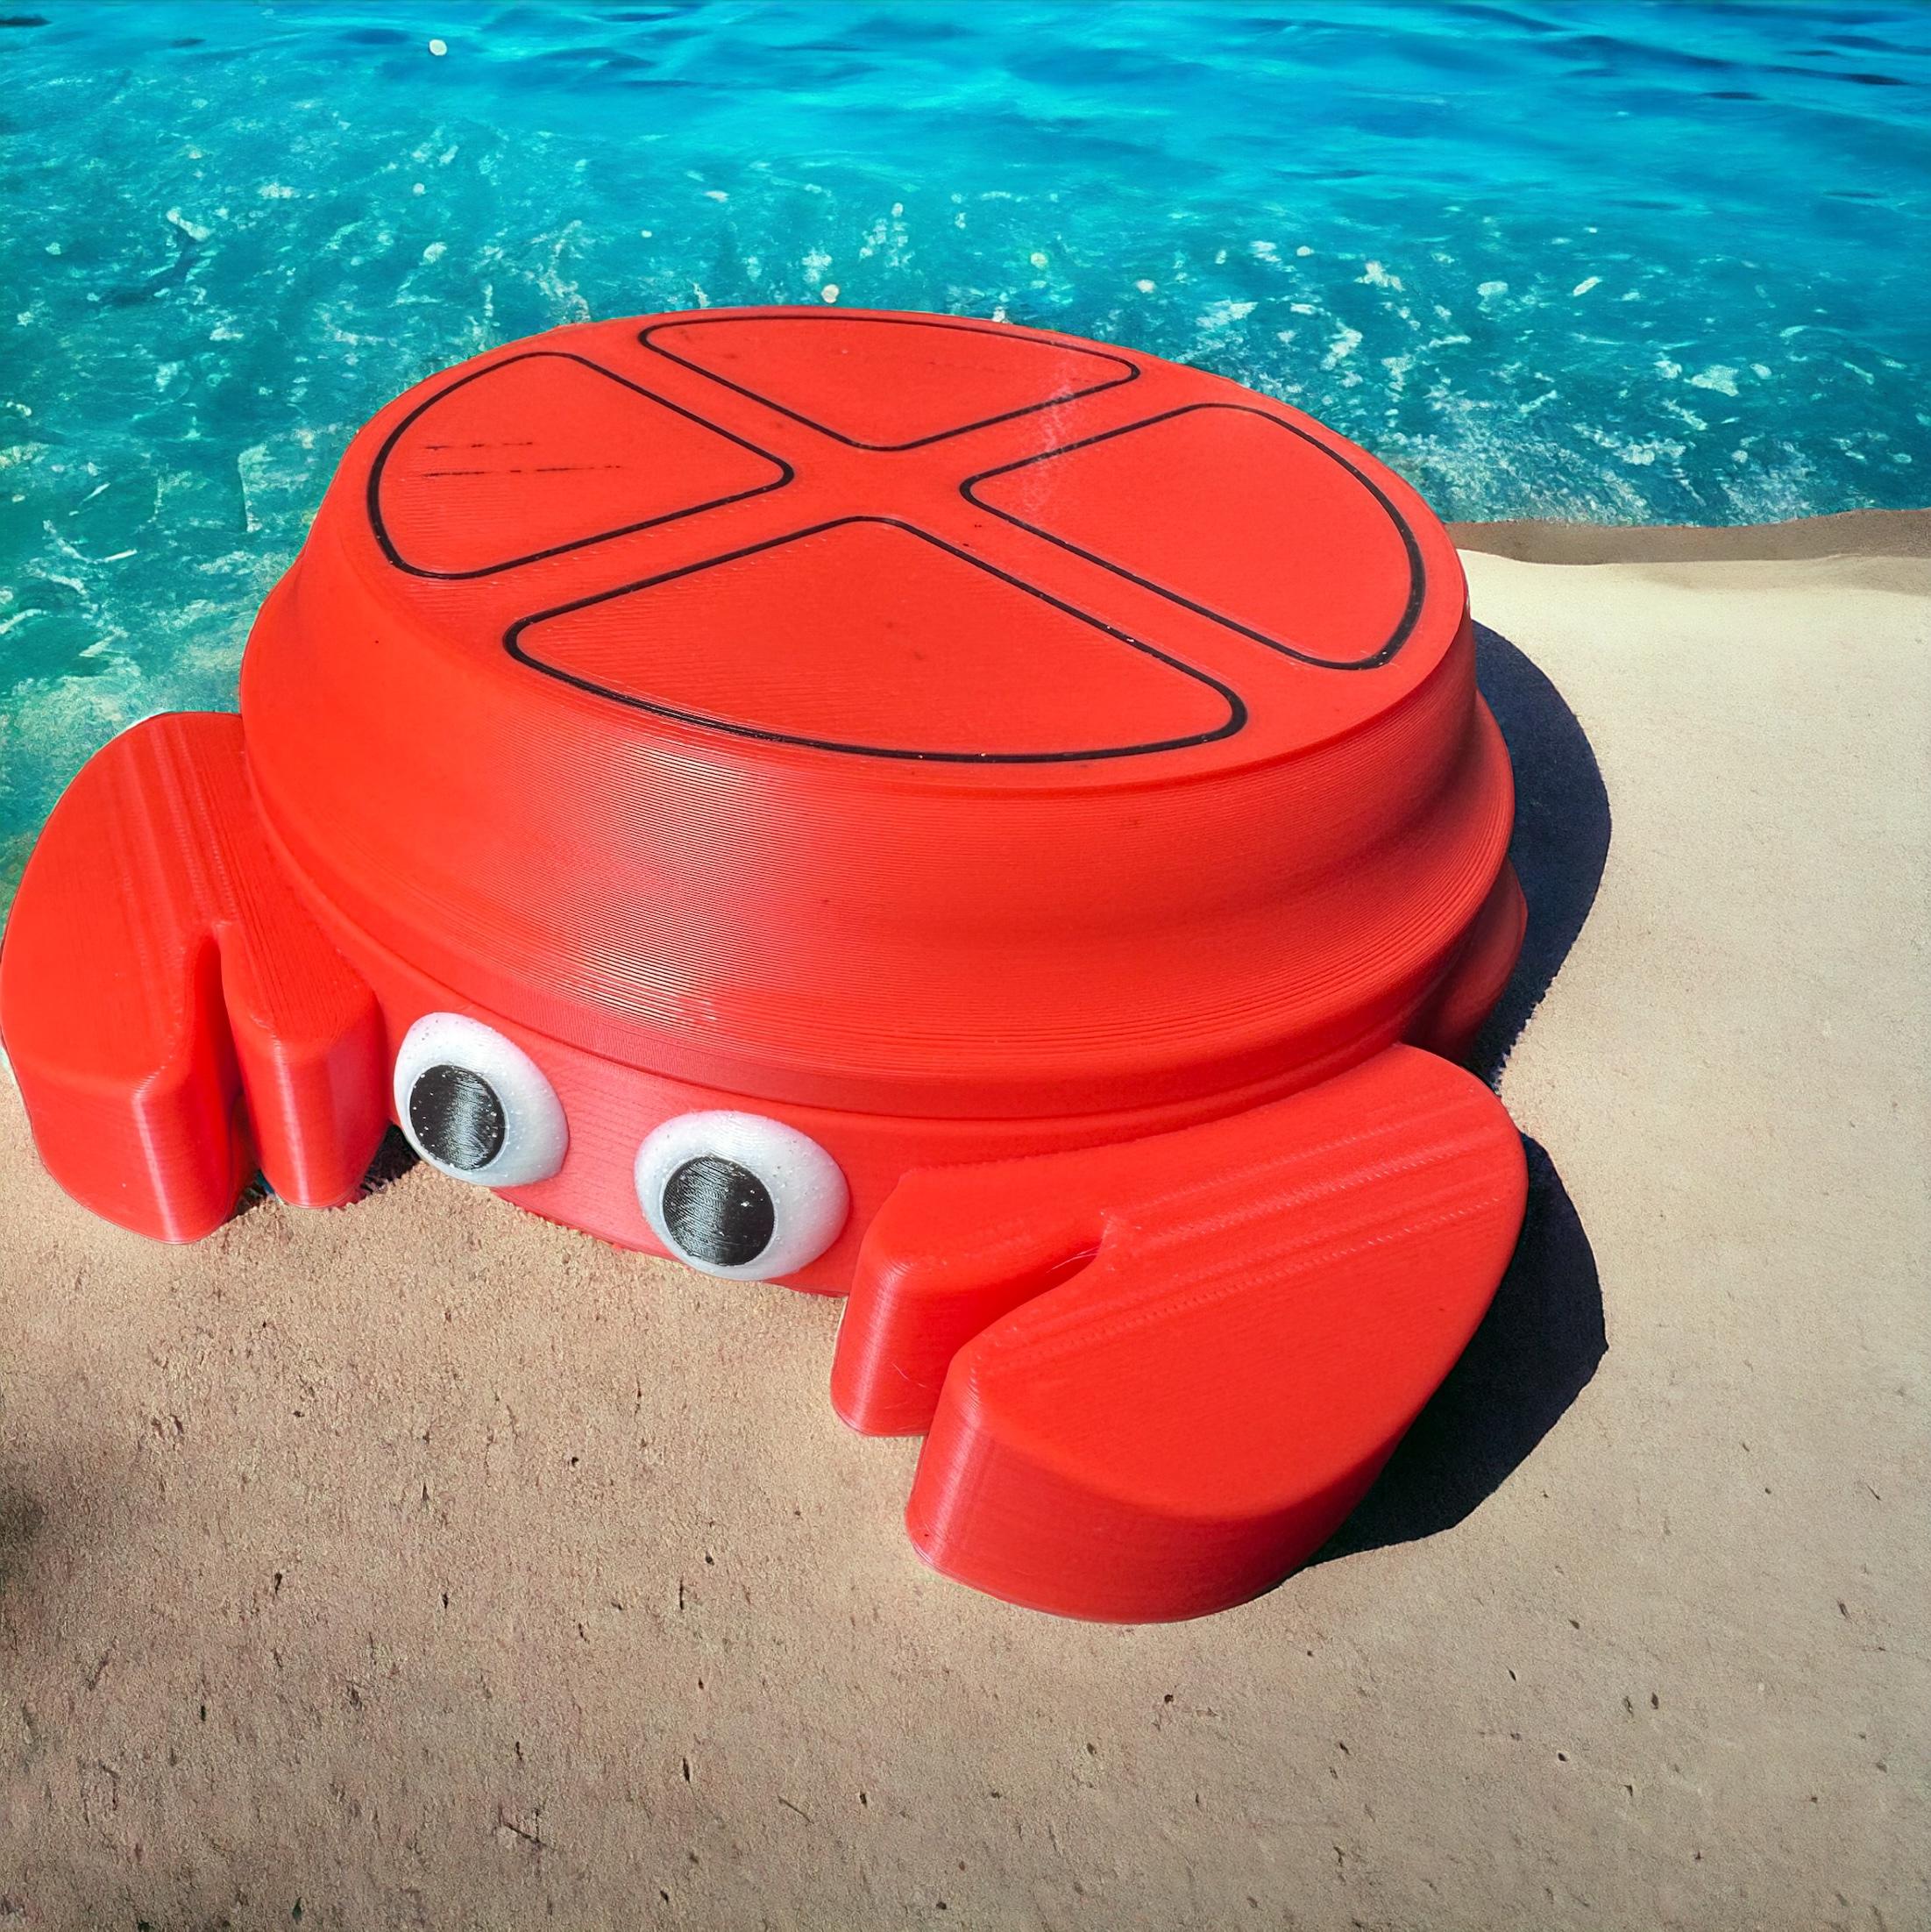 Crab Portable Sandbox - Locking LId - Nostalgic toys for kids and adults 3d model